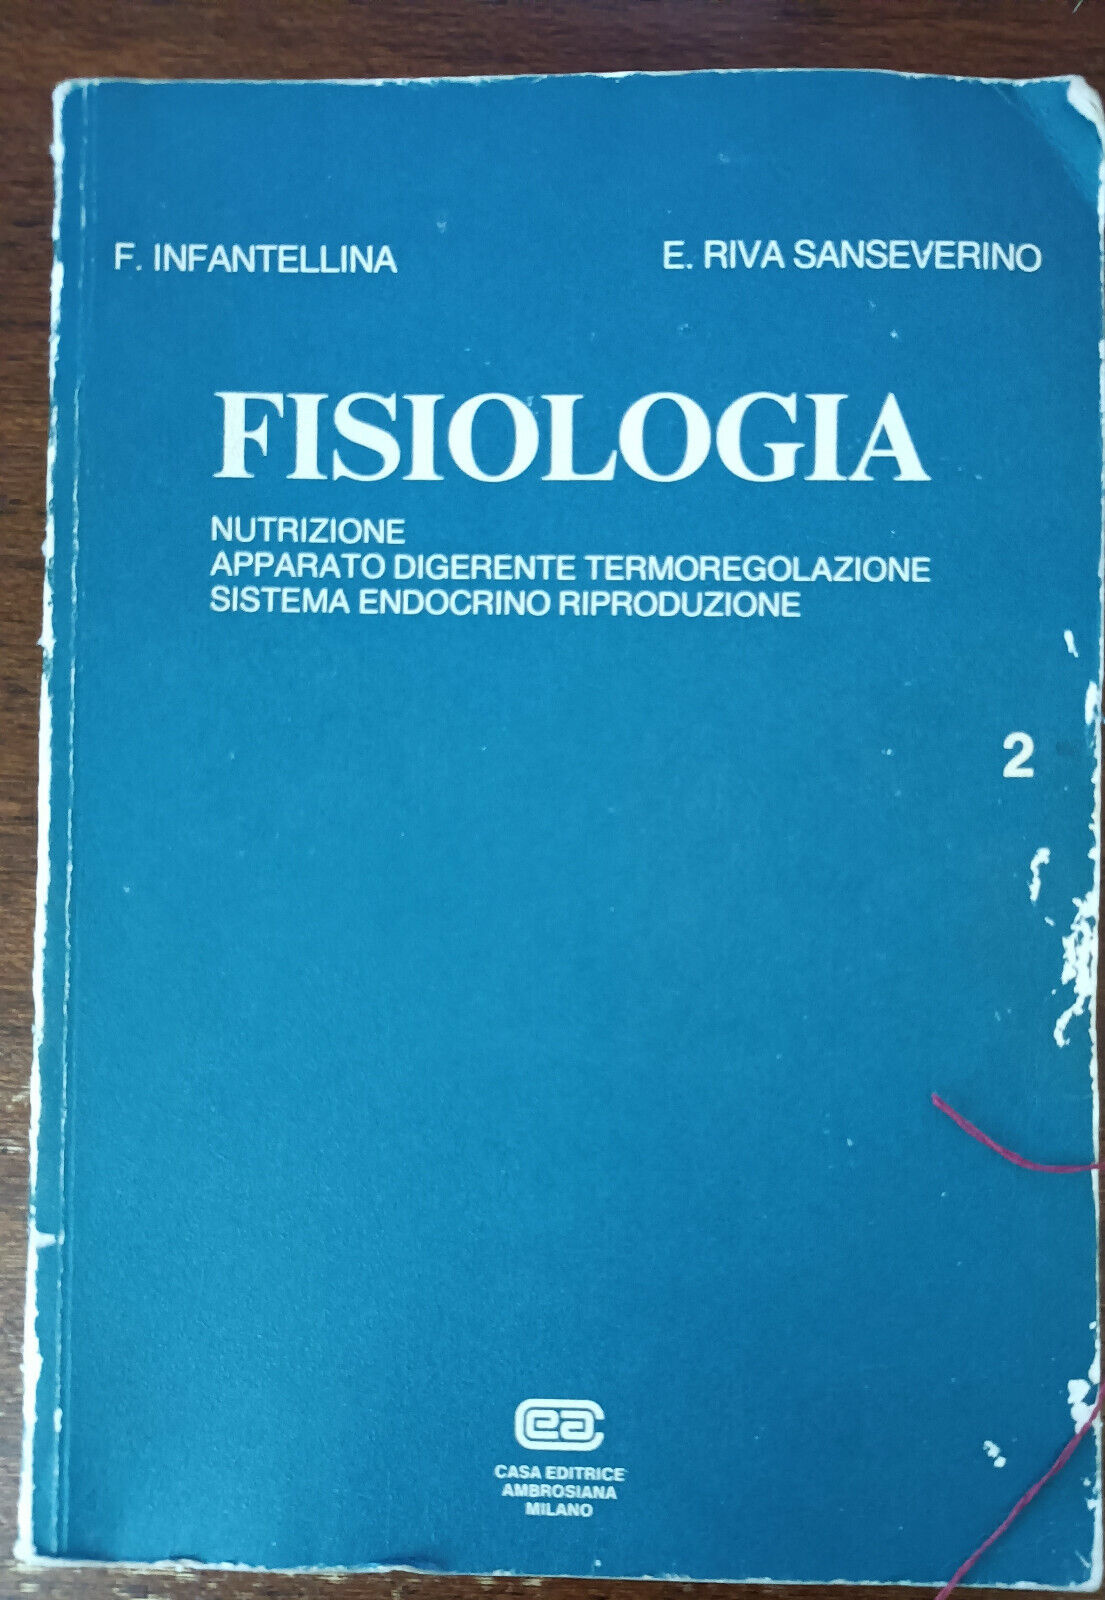 Fisiologia 2 - F. Infantellina, E. Riva Sanseverino - Ambrosiana, 1984 - A